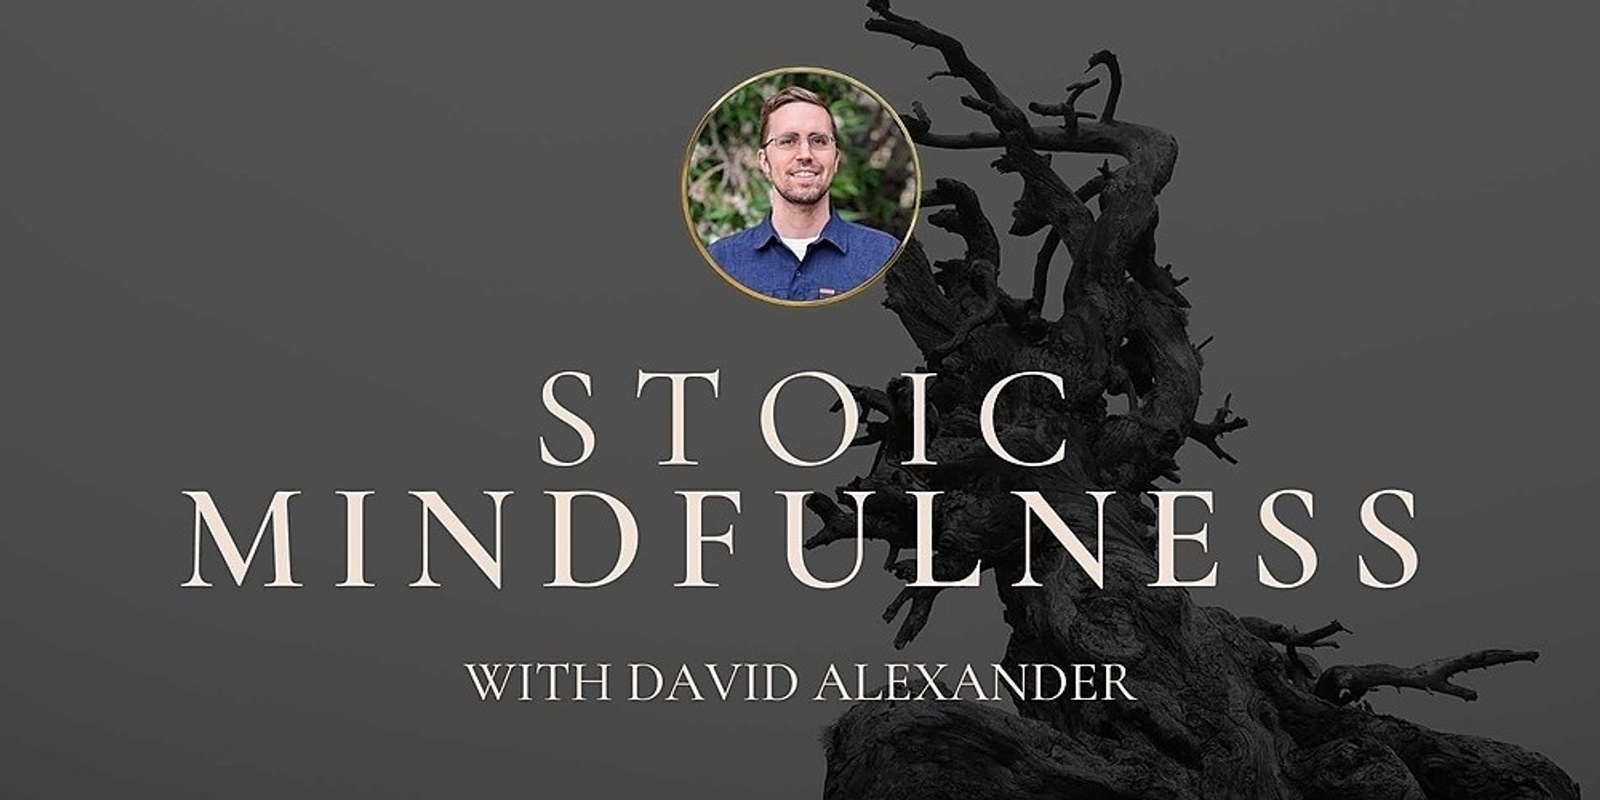 Stoic Mindfulness with David Alexander